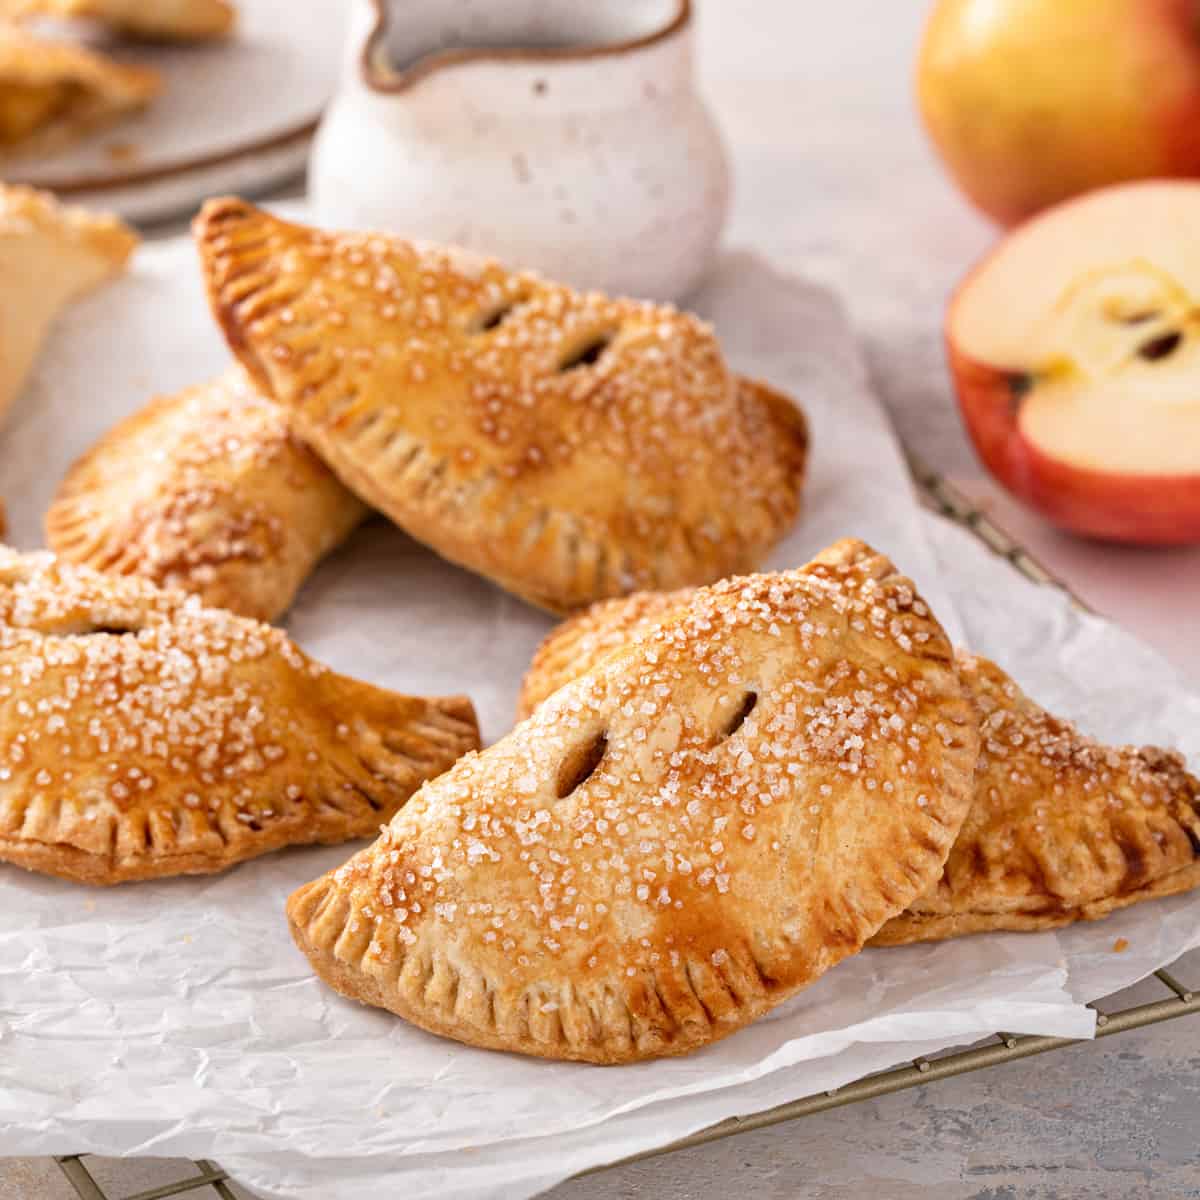 Apple Hand Pies - Live Well Bake Often